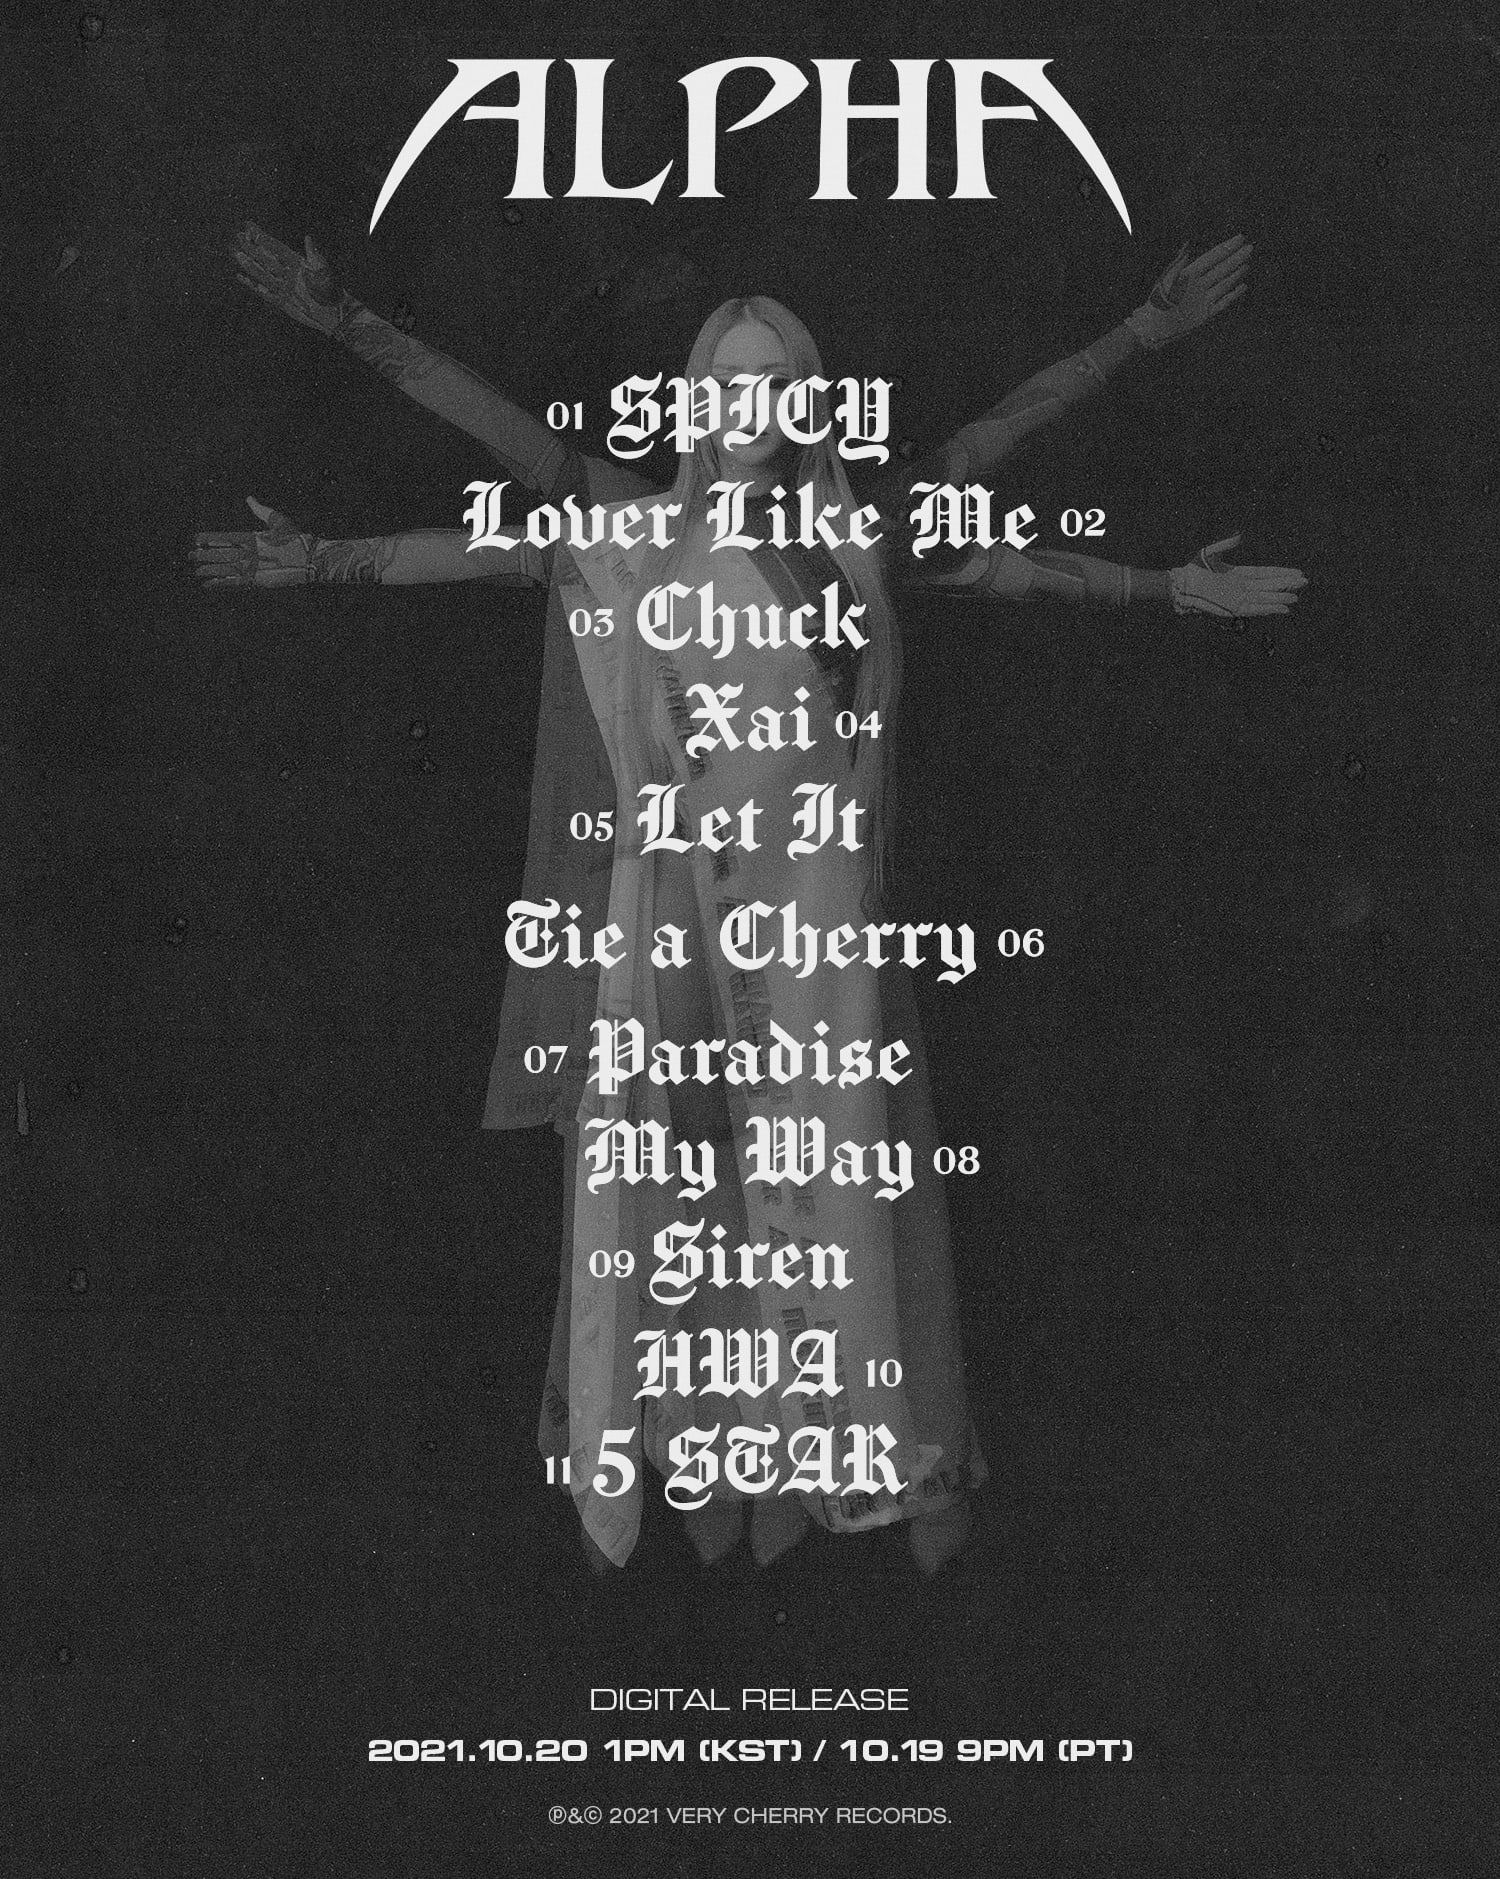 Tracklist Album "Alpha" CL 2NE1